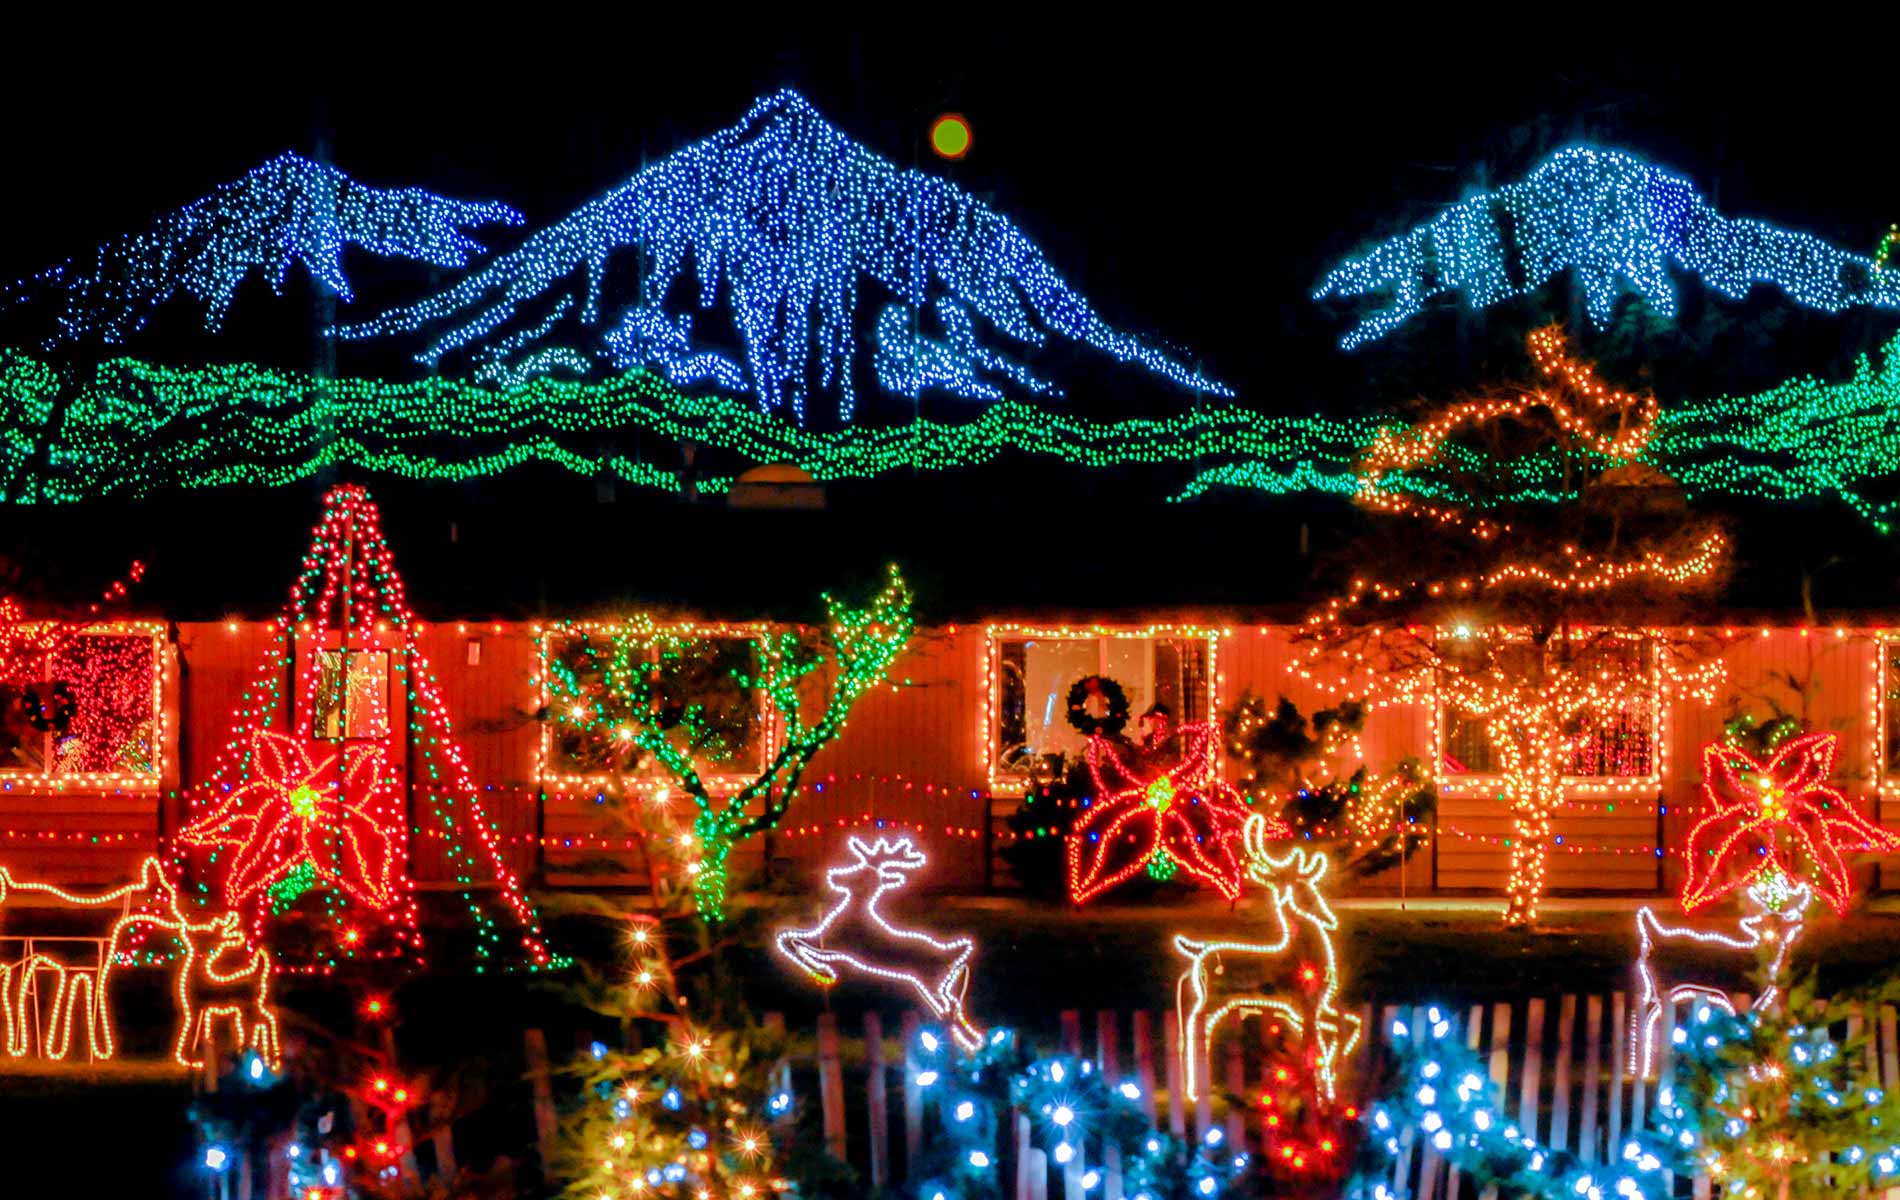 D:\Sally Bai\生活網文章\1205\Deer_Mountain_Lodge_at_The_Lights_of_Christmas5.jpg